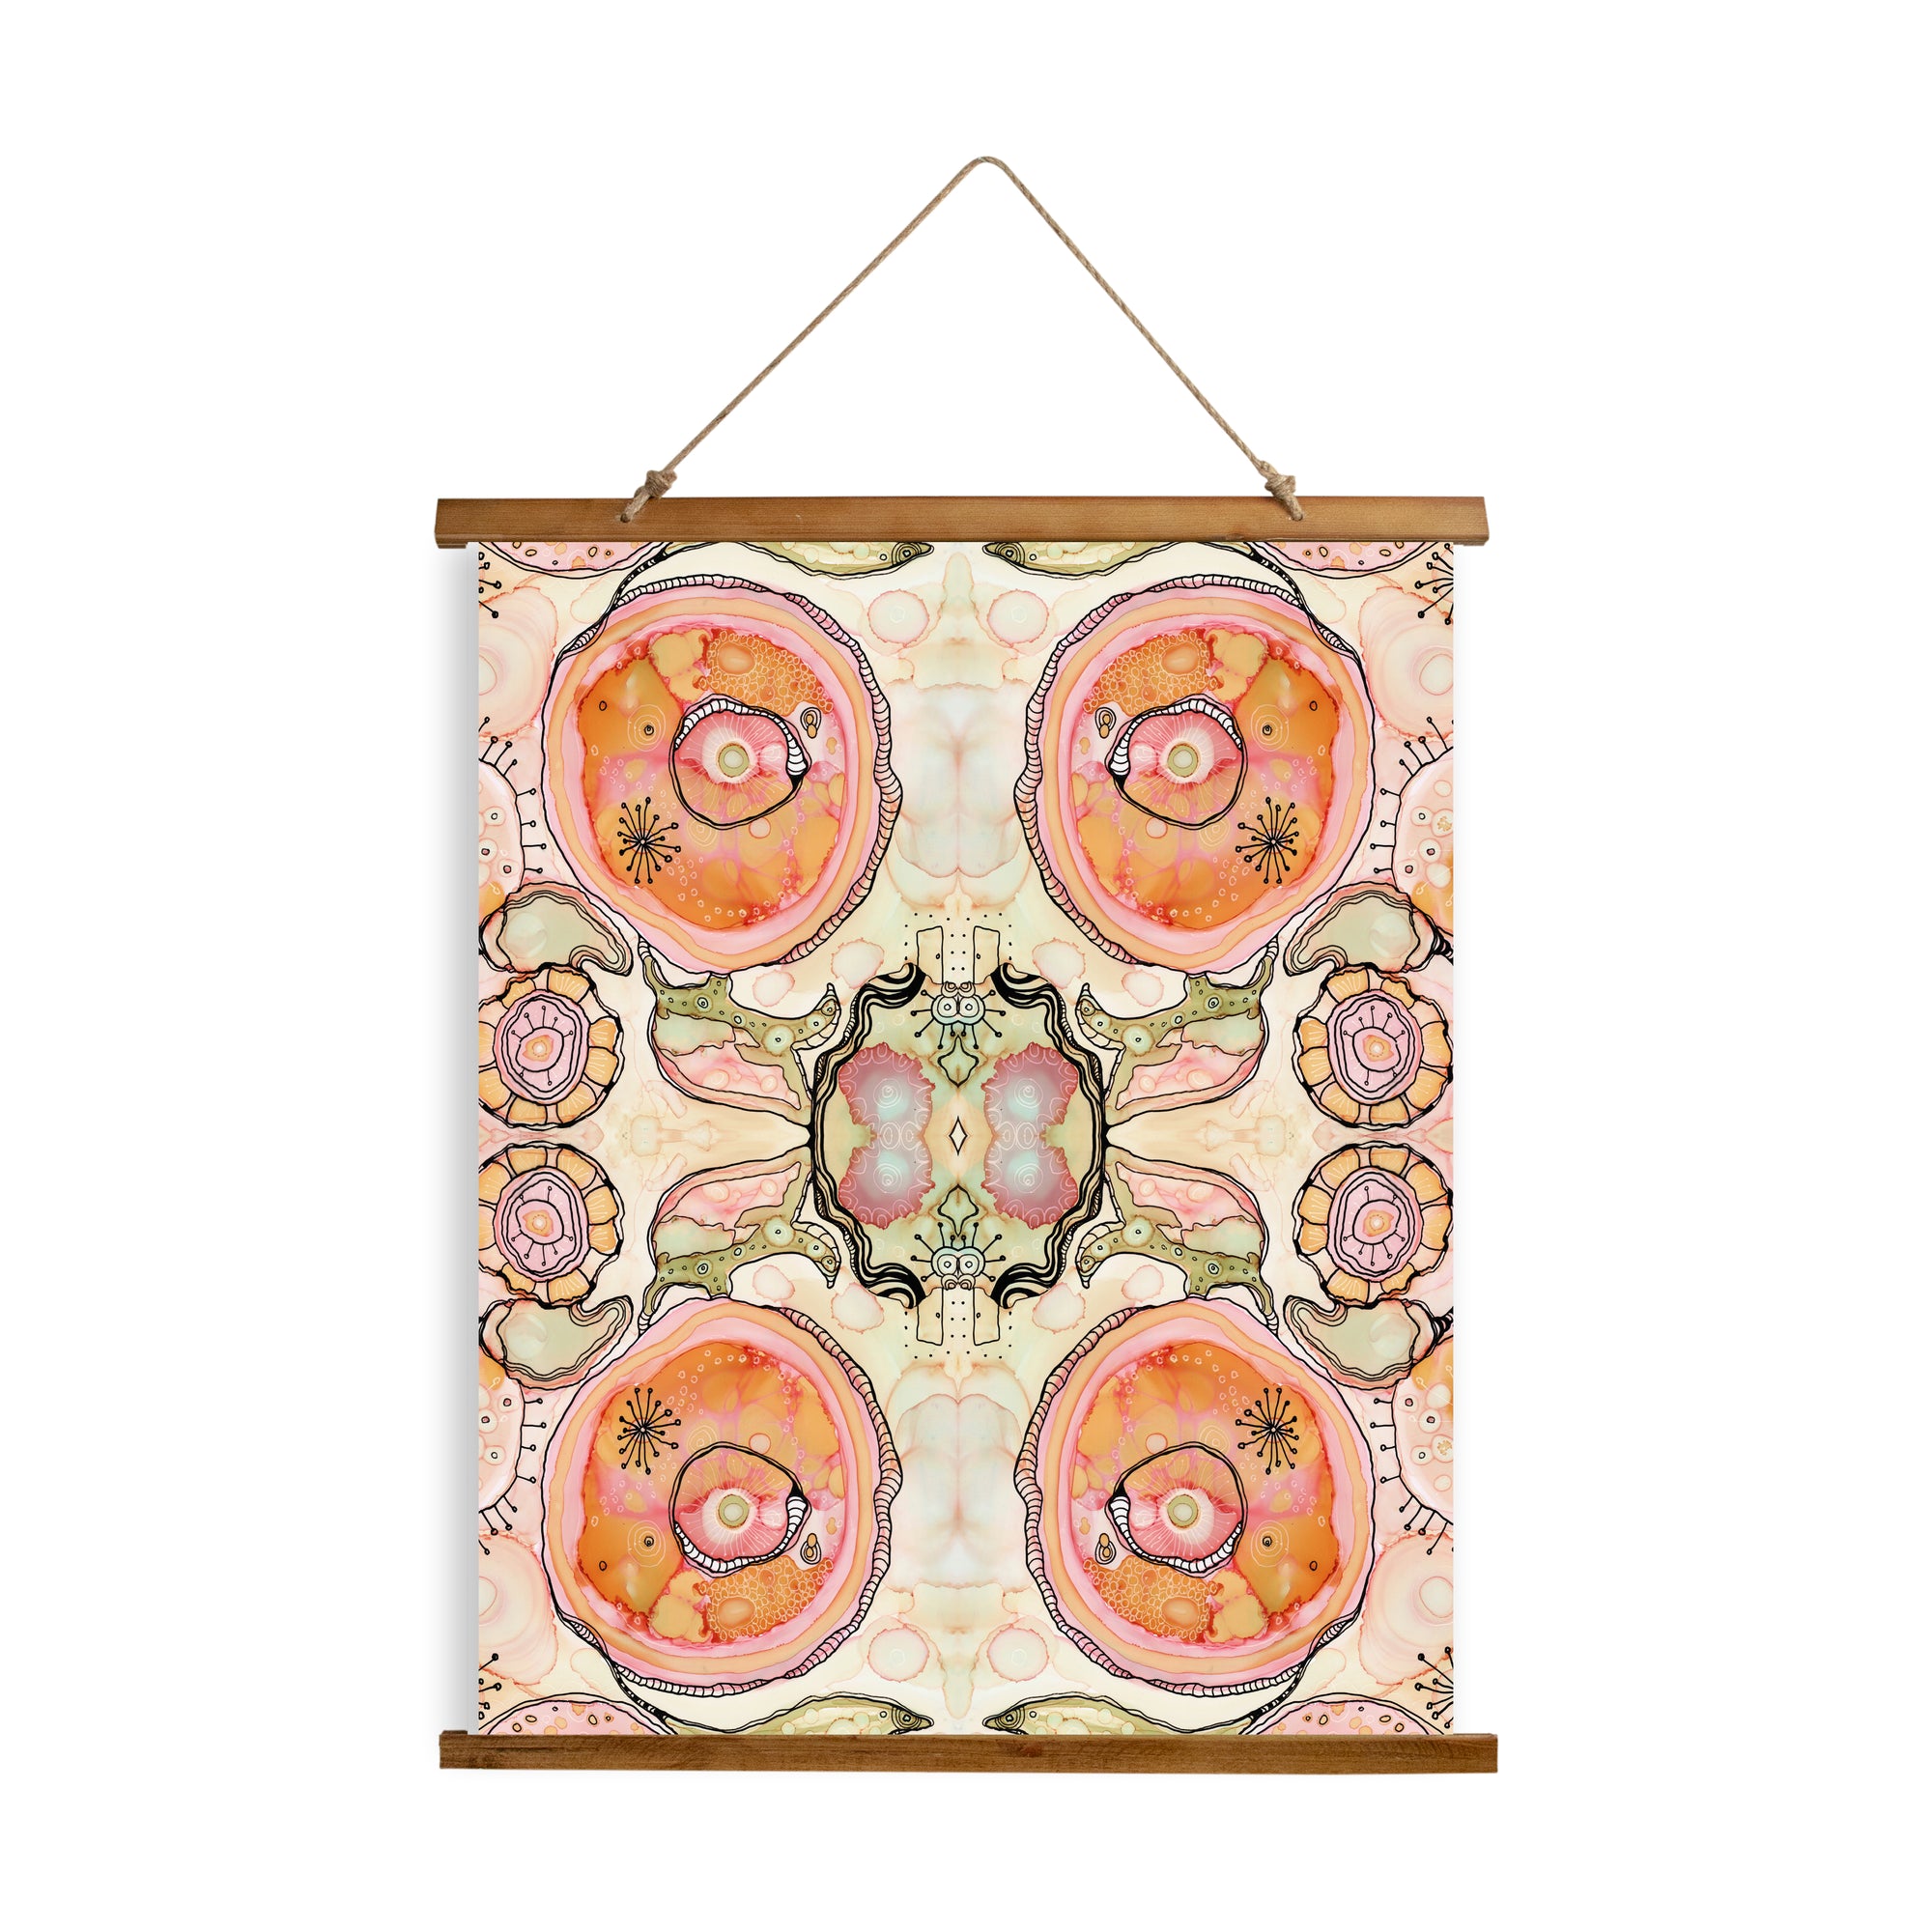 Whimsical Wood Slat Tapestry "Lookin in"